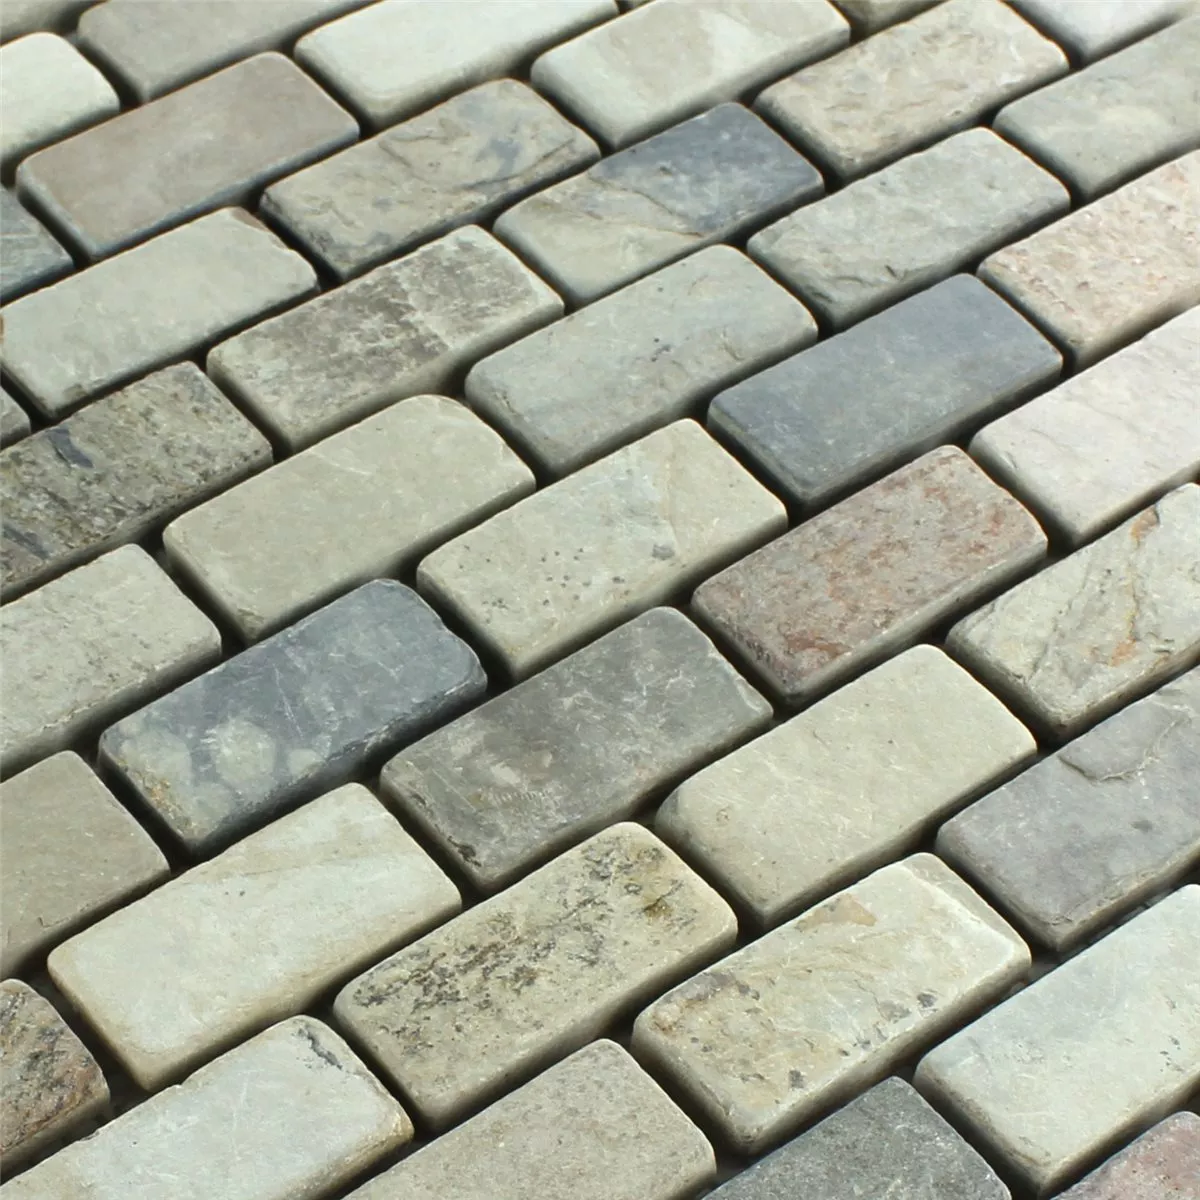 Mosaic Tiles Slate Brick Indian Autumn